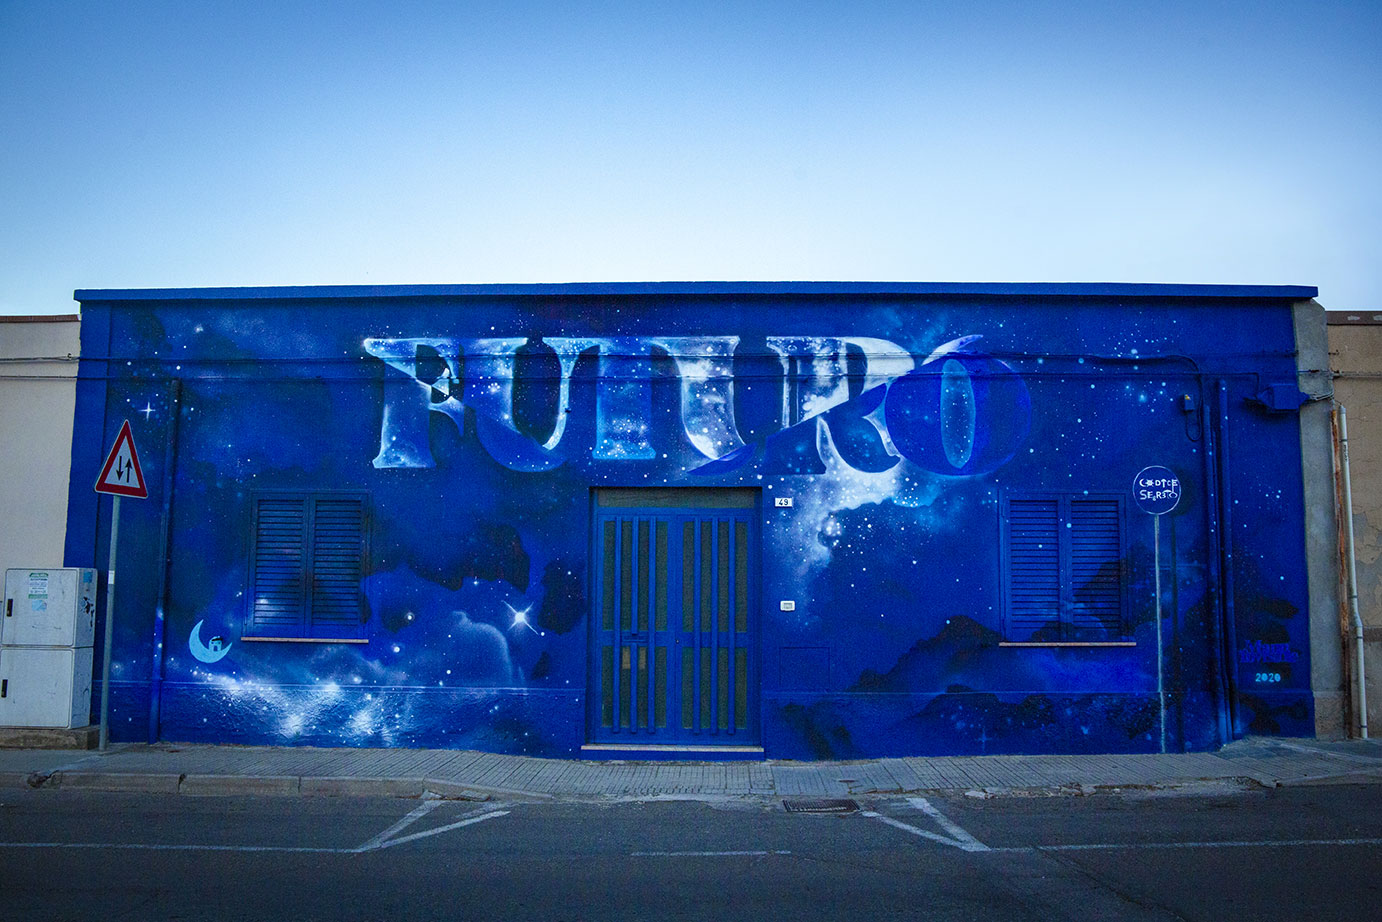 ''Futuro'' Spray et peinture de quartz sur le mur 12 x 4 m Casa Futuro S.Teresa Pirri 2020